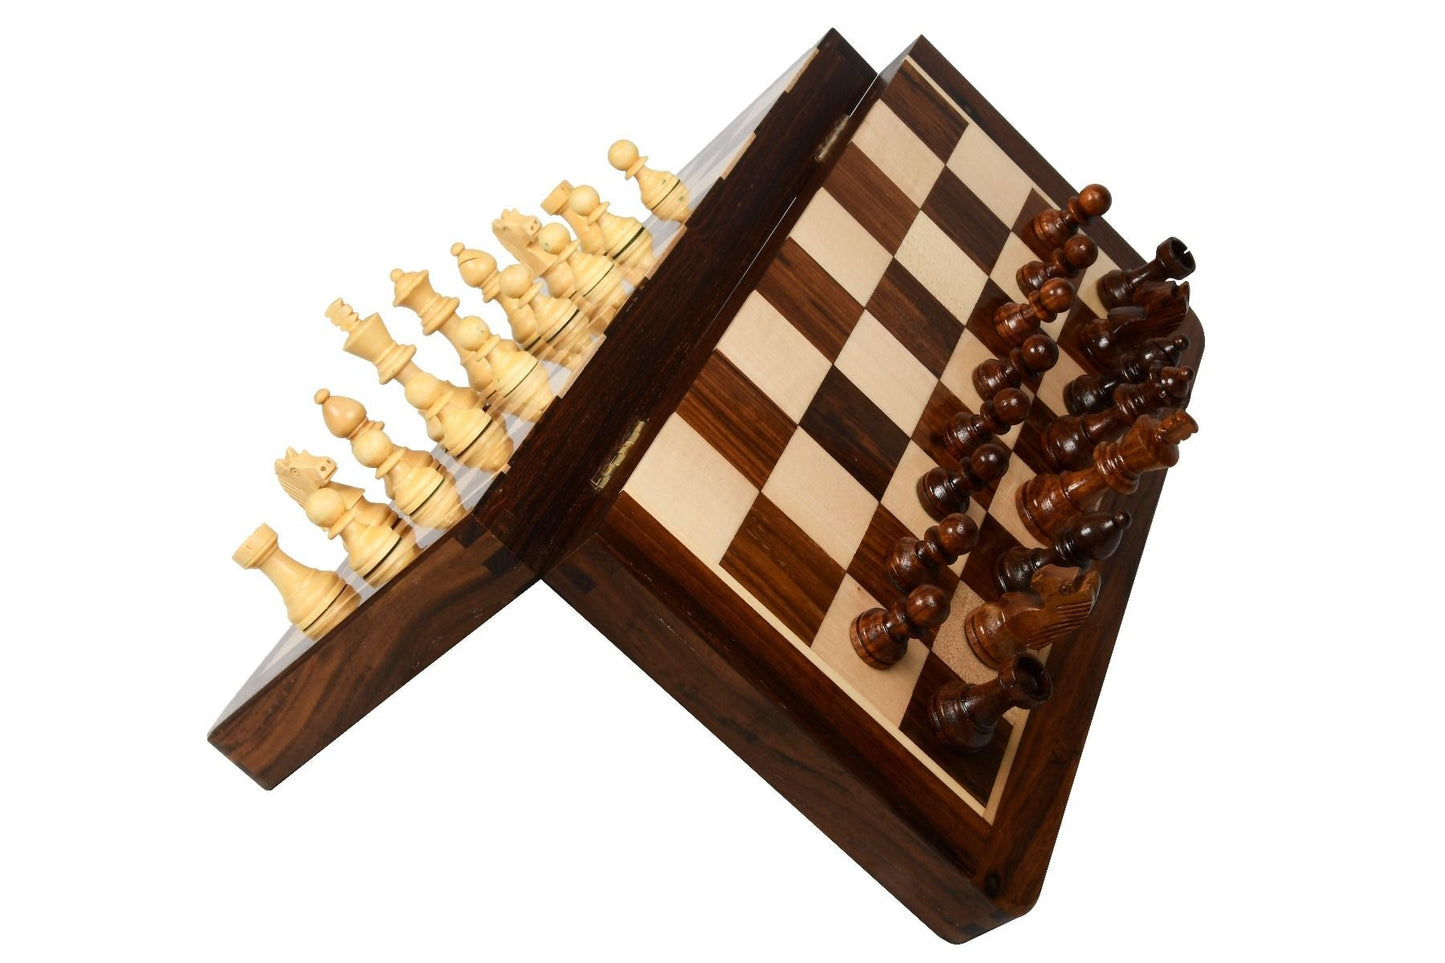 12" Foldable magnetic chess set in Sheesham & Maple